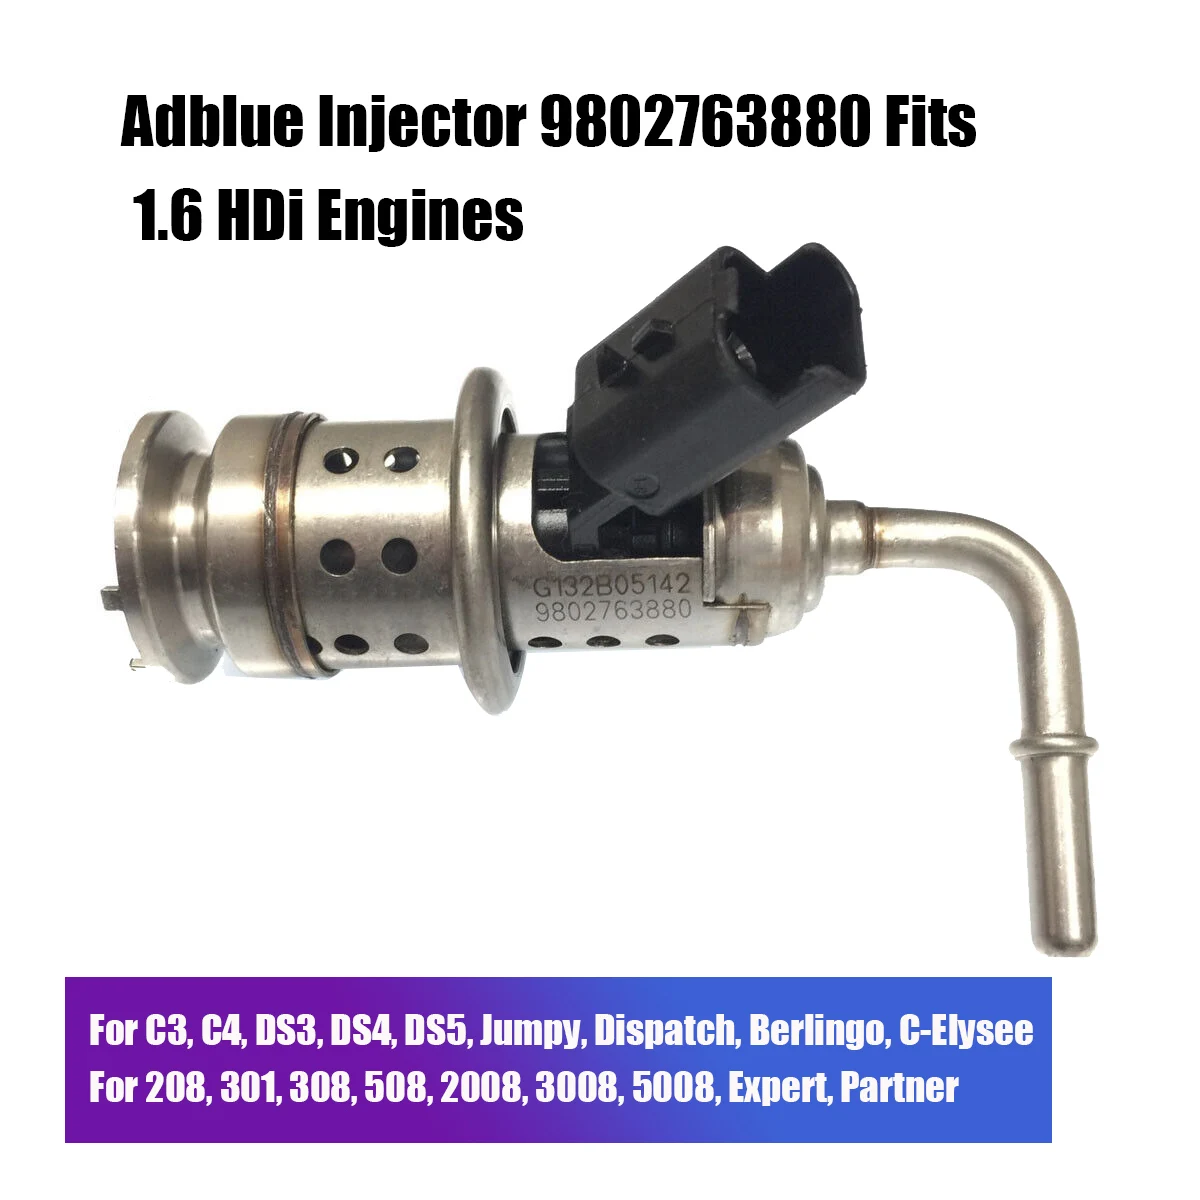 

Adblue Injector Fuel Nozzle Valve 9802763880 for Citroen C3 C4 DS3 DS4 Berlingo Peugeot 208 308 508 2008 3008 5008